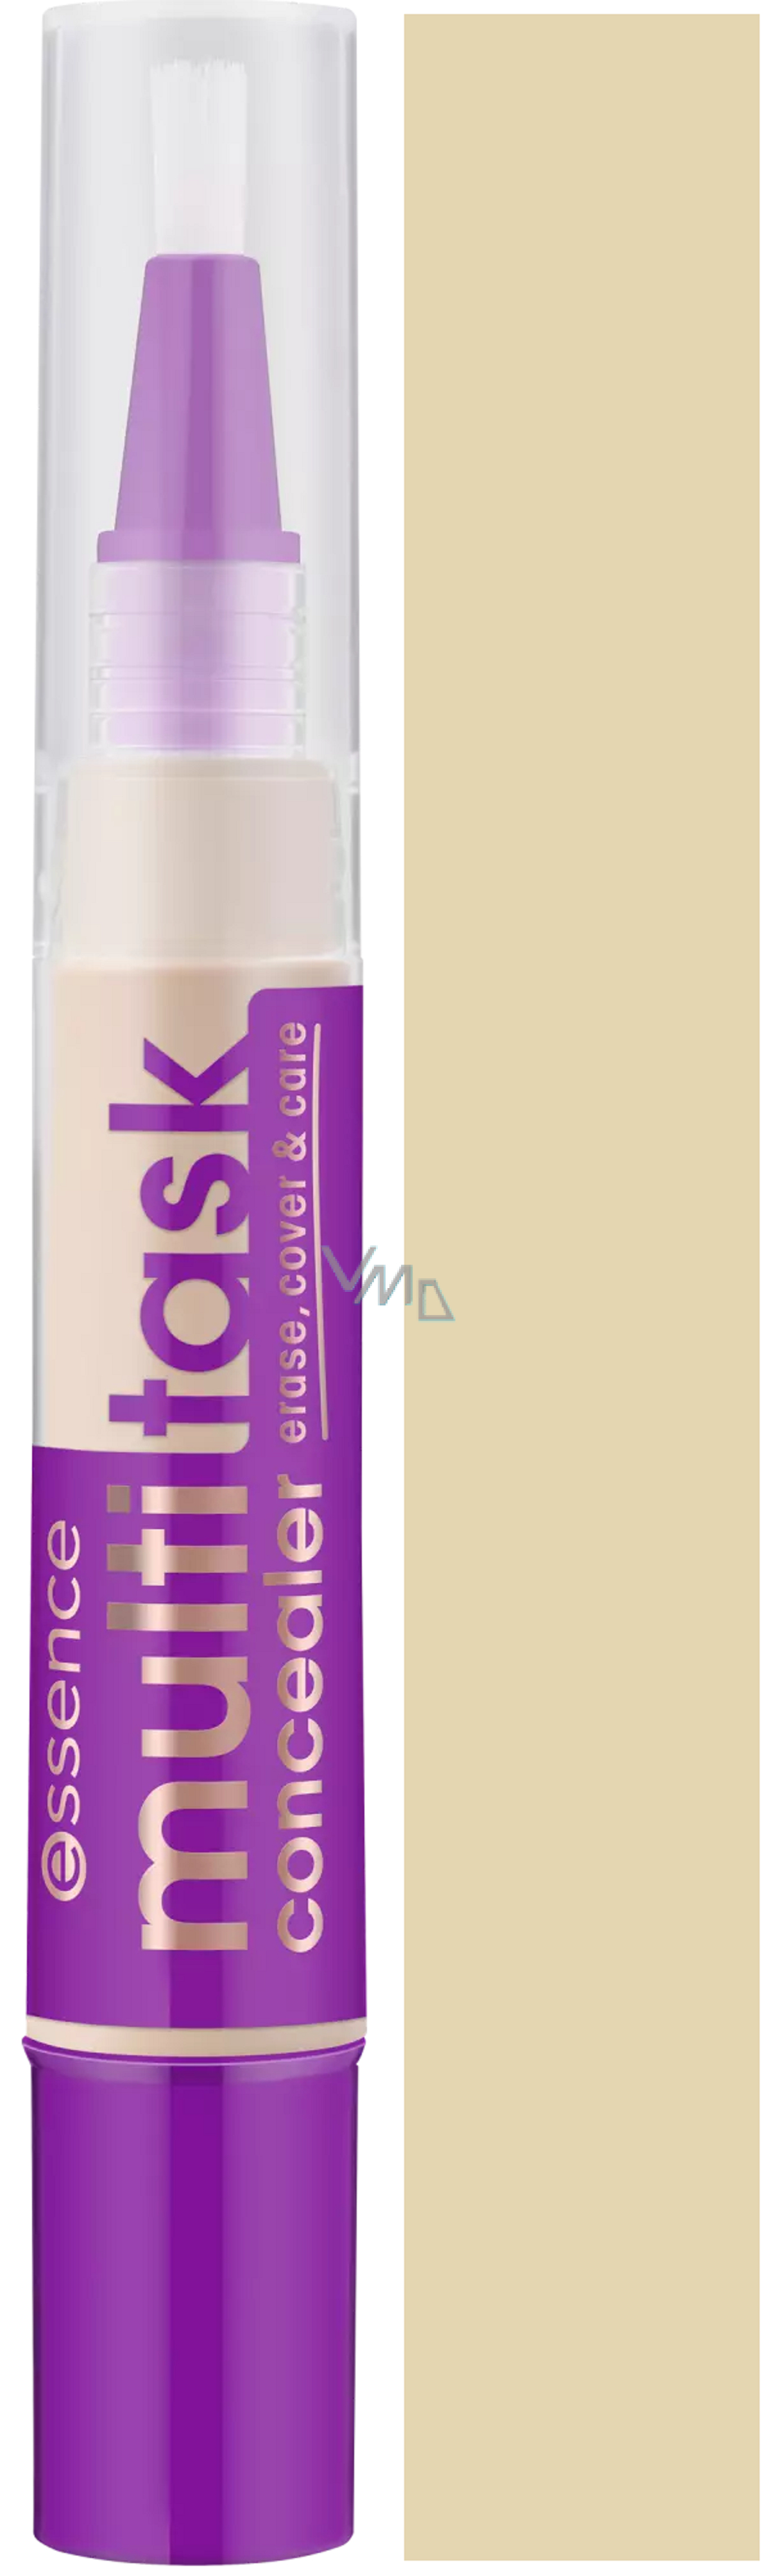 Essence Multitask Liquid Concealer 15 - drogerie - Natural parfumerie ml 3 Nude VMD